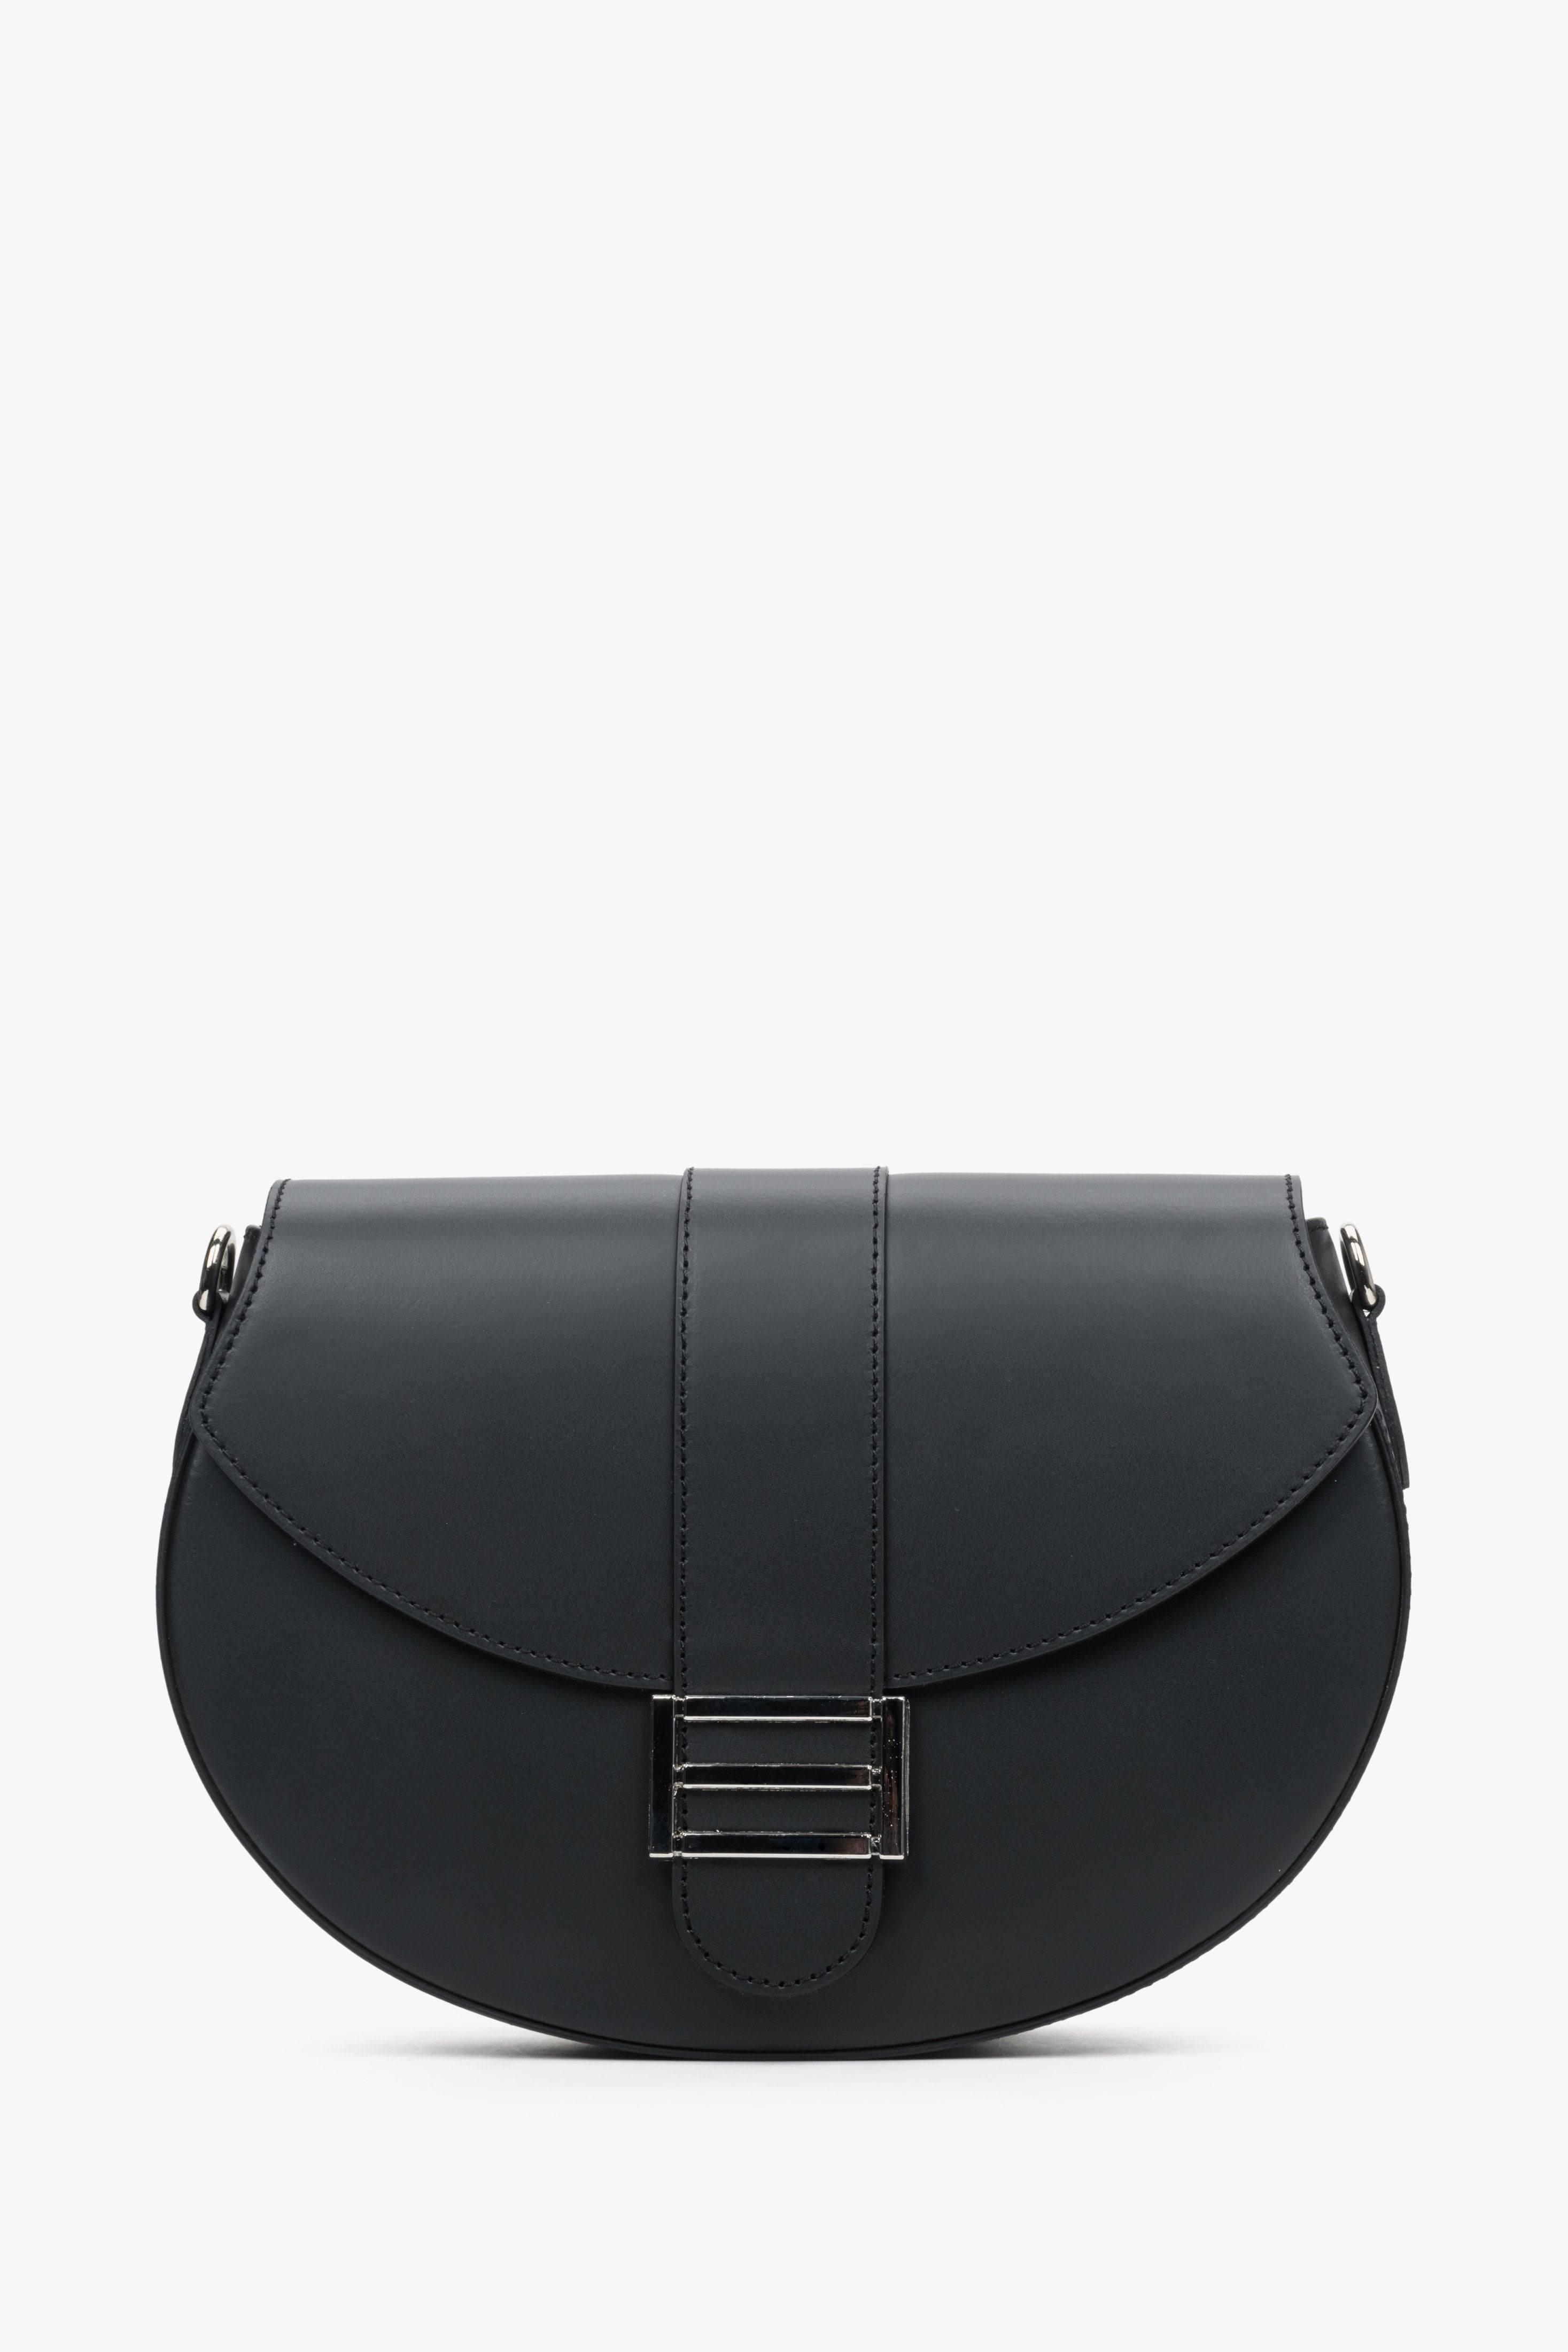 Medium-sized women's black leather handbag with a silver clasp.